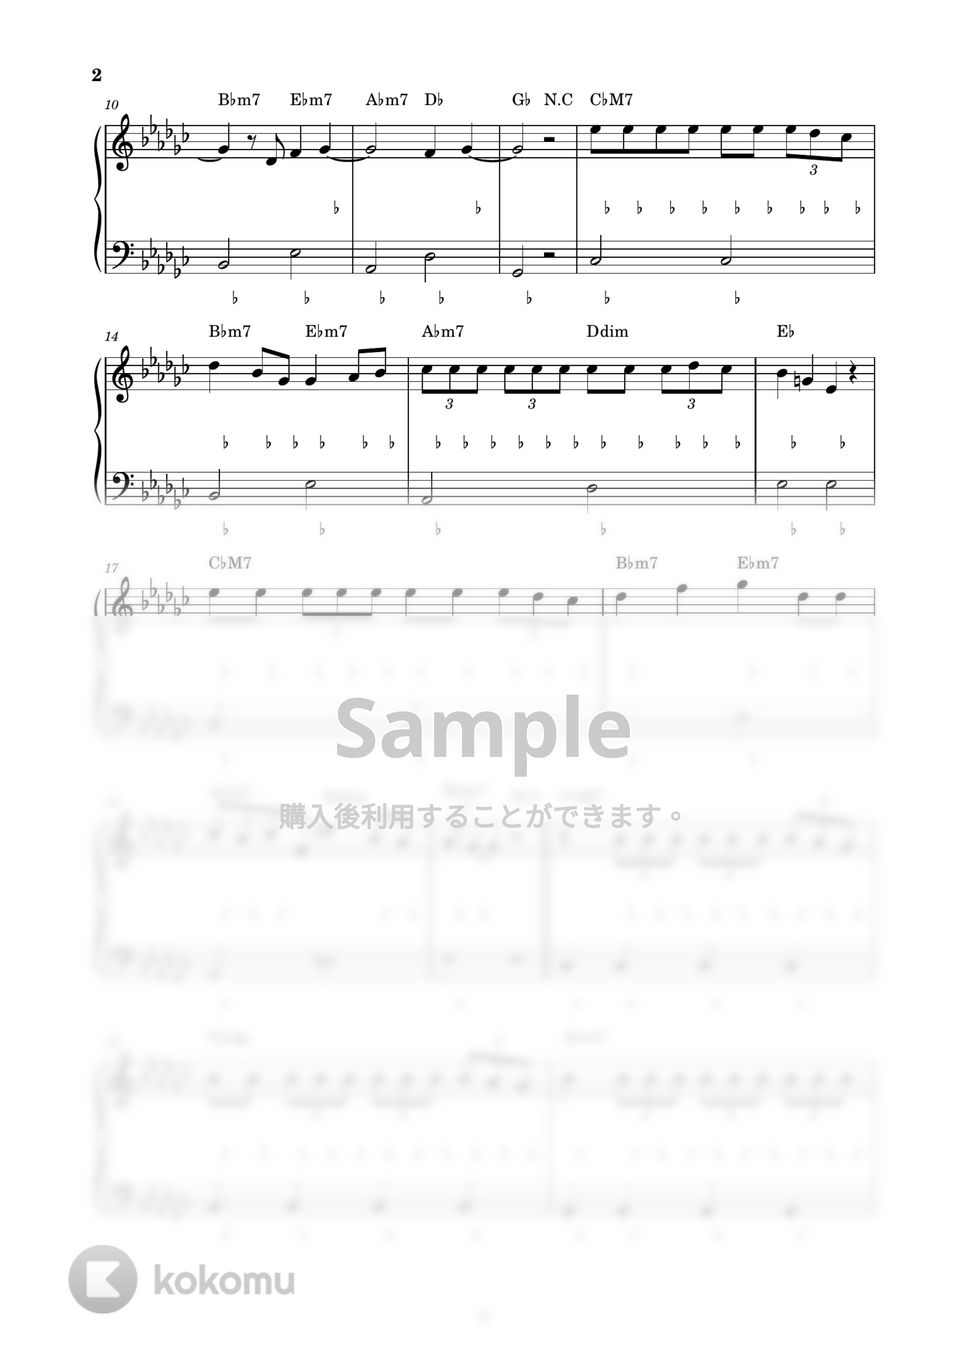 Official髭男dism - Subtitle (ピアノ楽譜 / かんたん両手 / 歌詞付き / ドレミ付き / 初心者向き) by piano.tokyo